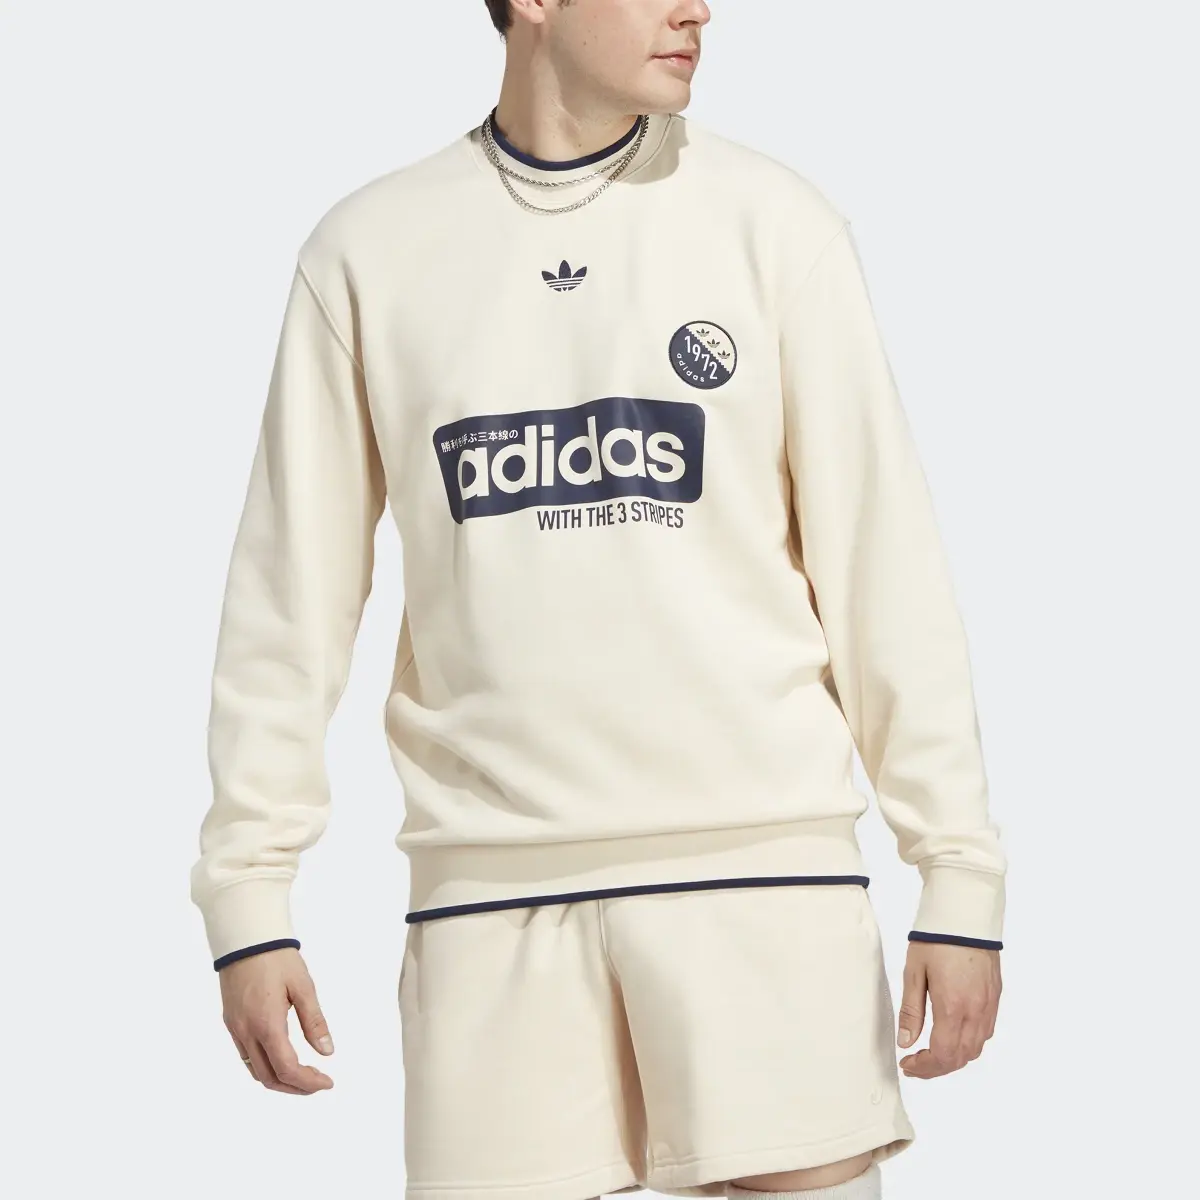 Adidas Sweat-shirt ras-du-cou Blokepop. 1